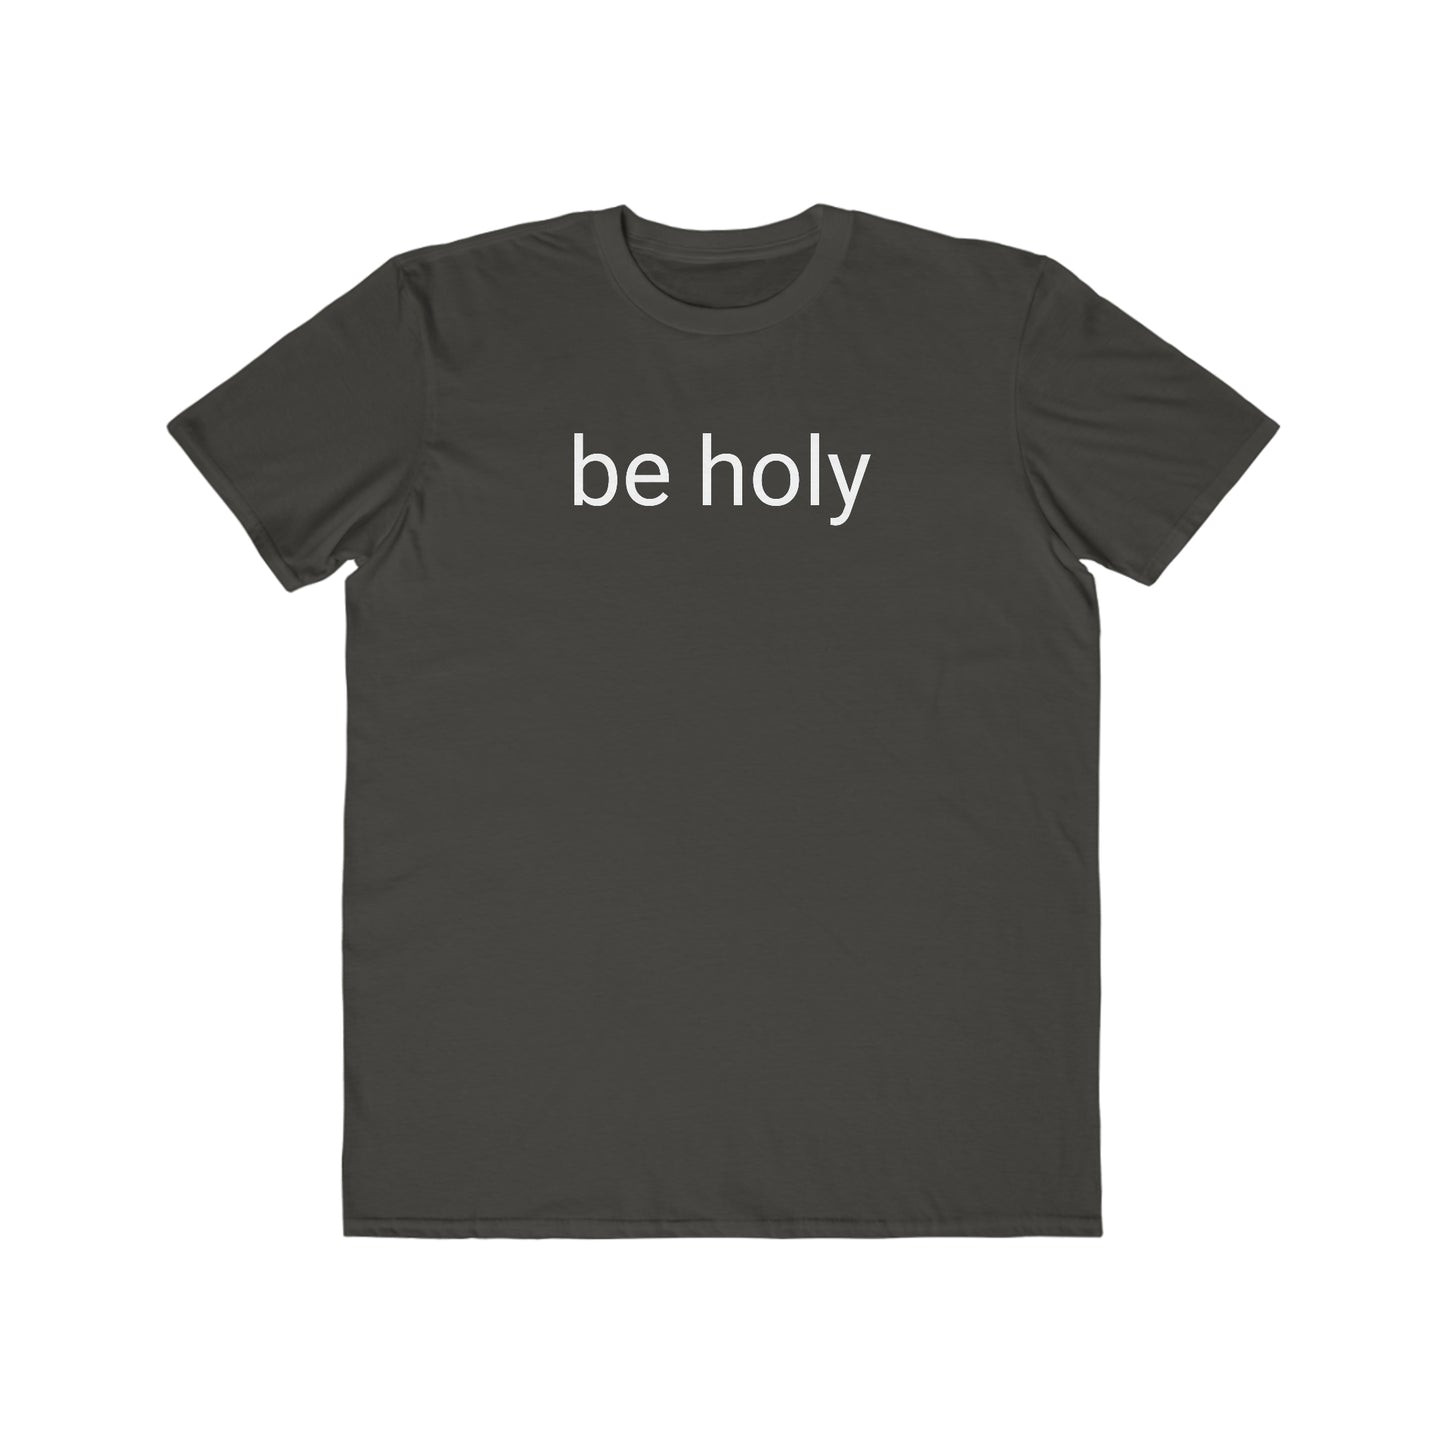 Be Holy - Men's Lightweight Fashion Tee